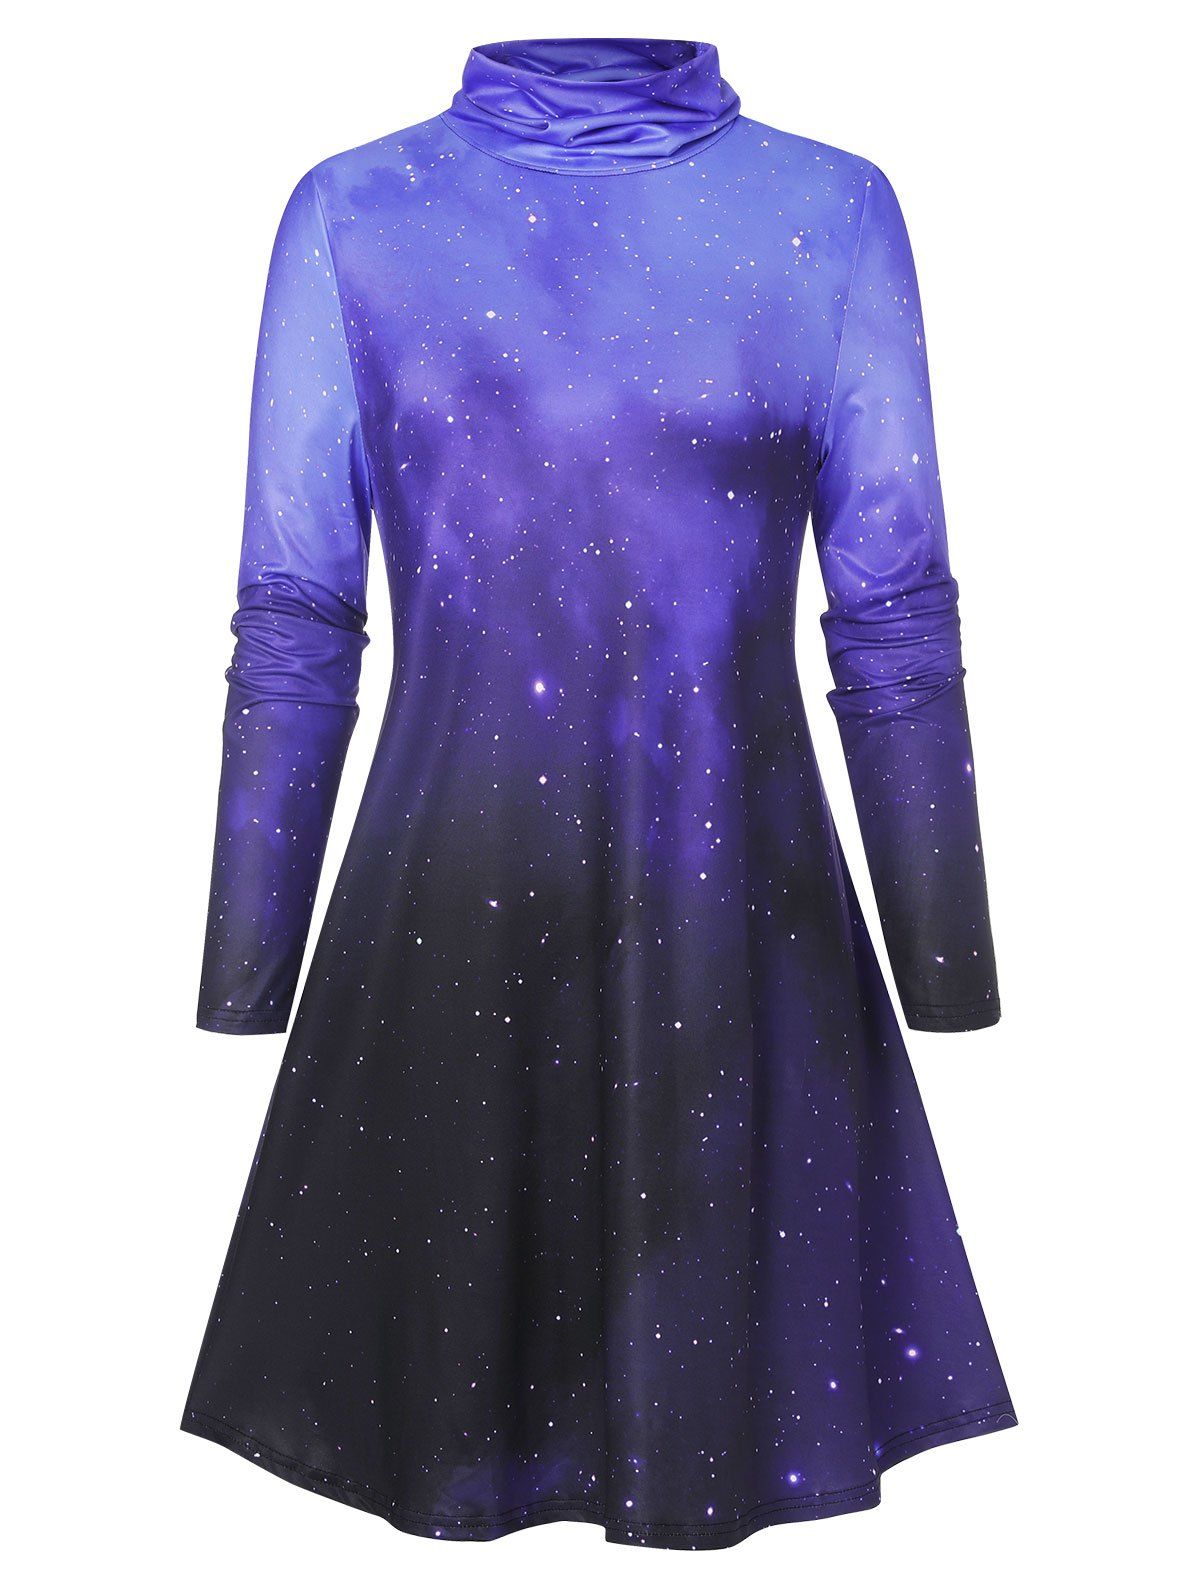 Galaxy Starry Turtleneck Long Sleeve Dress - PURPLE XL